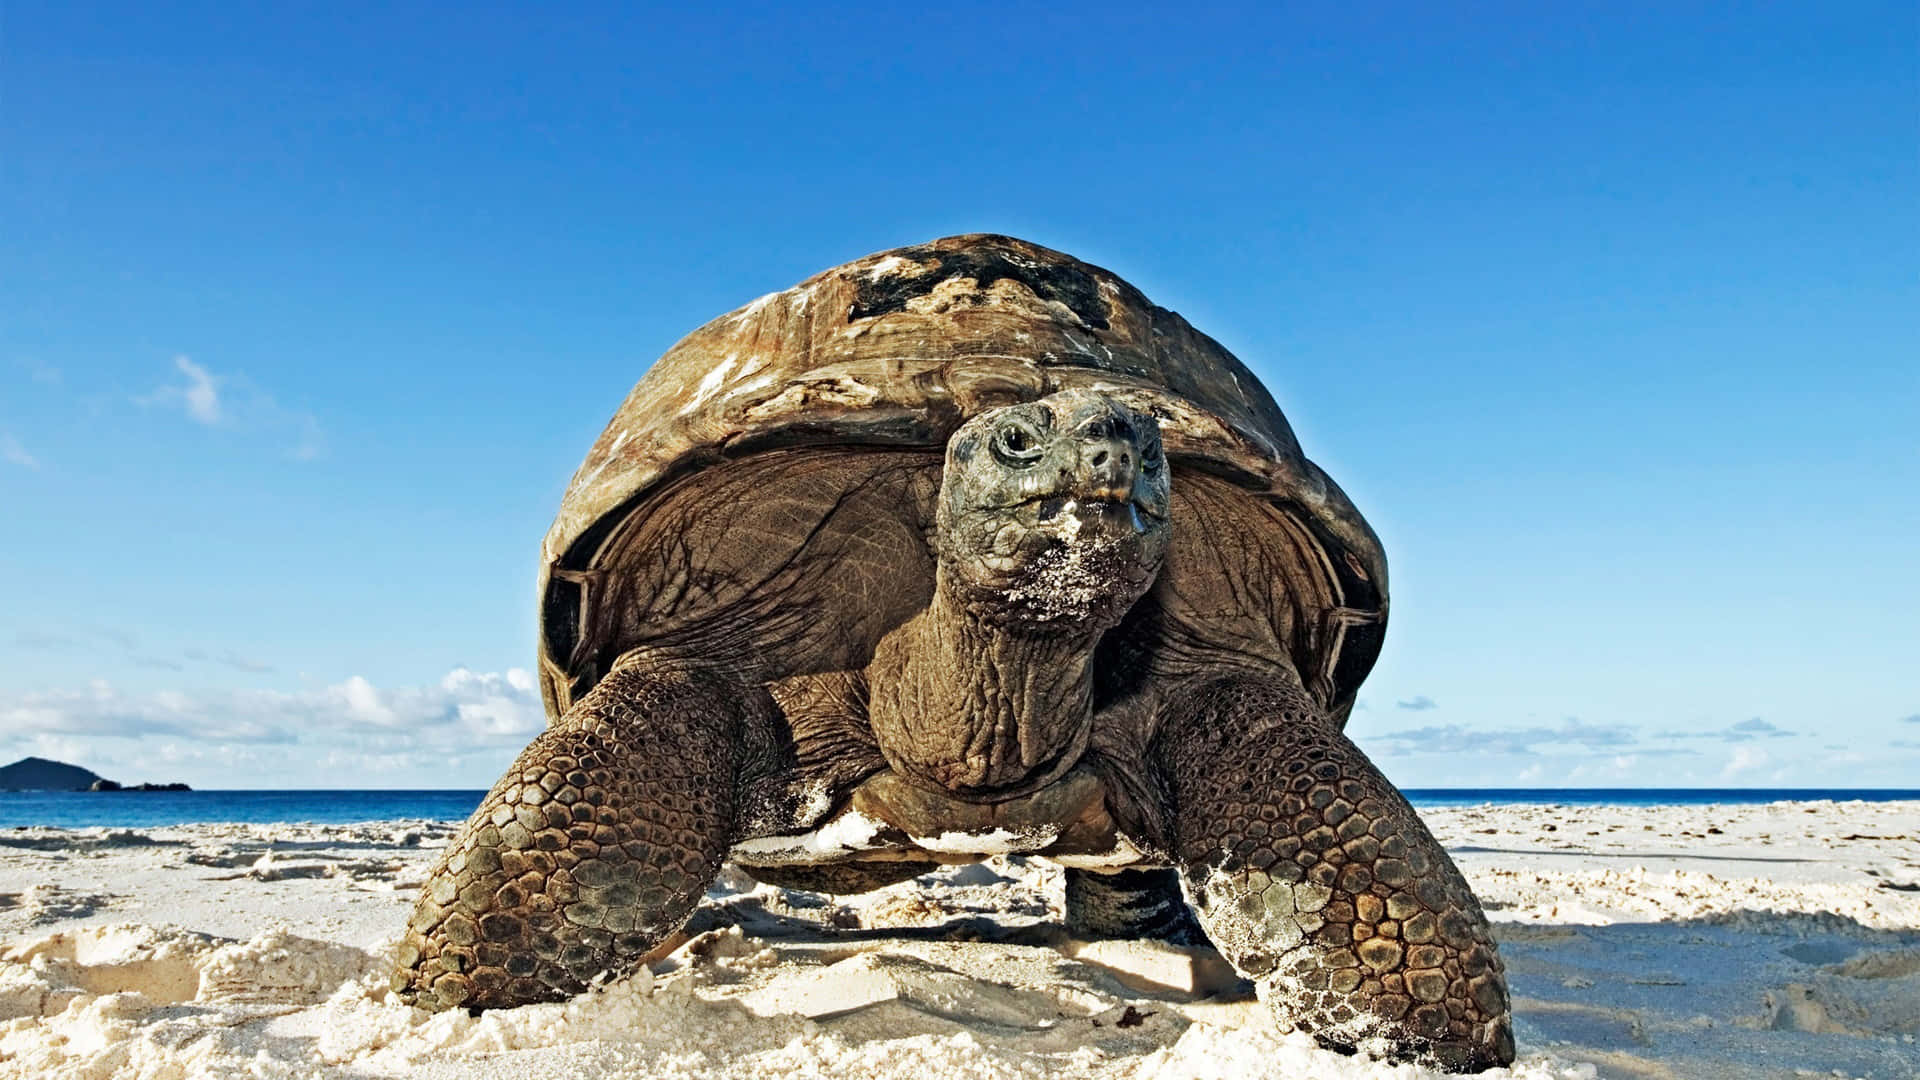 A Large Tortoise Walking On The Beach Wallpaper